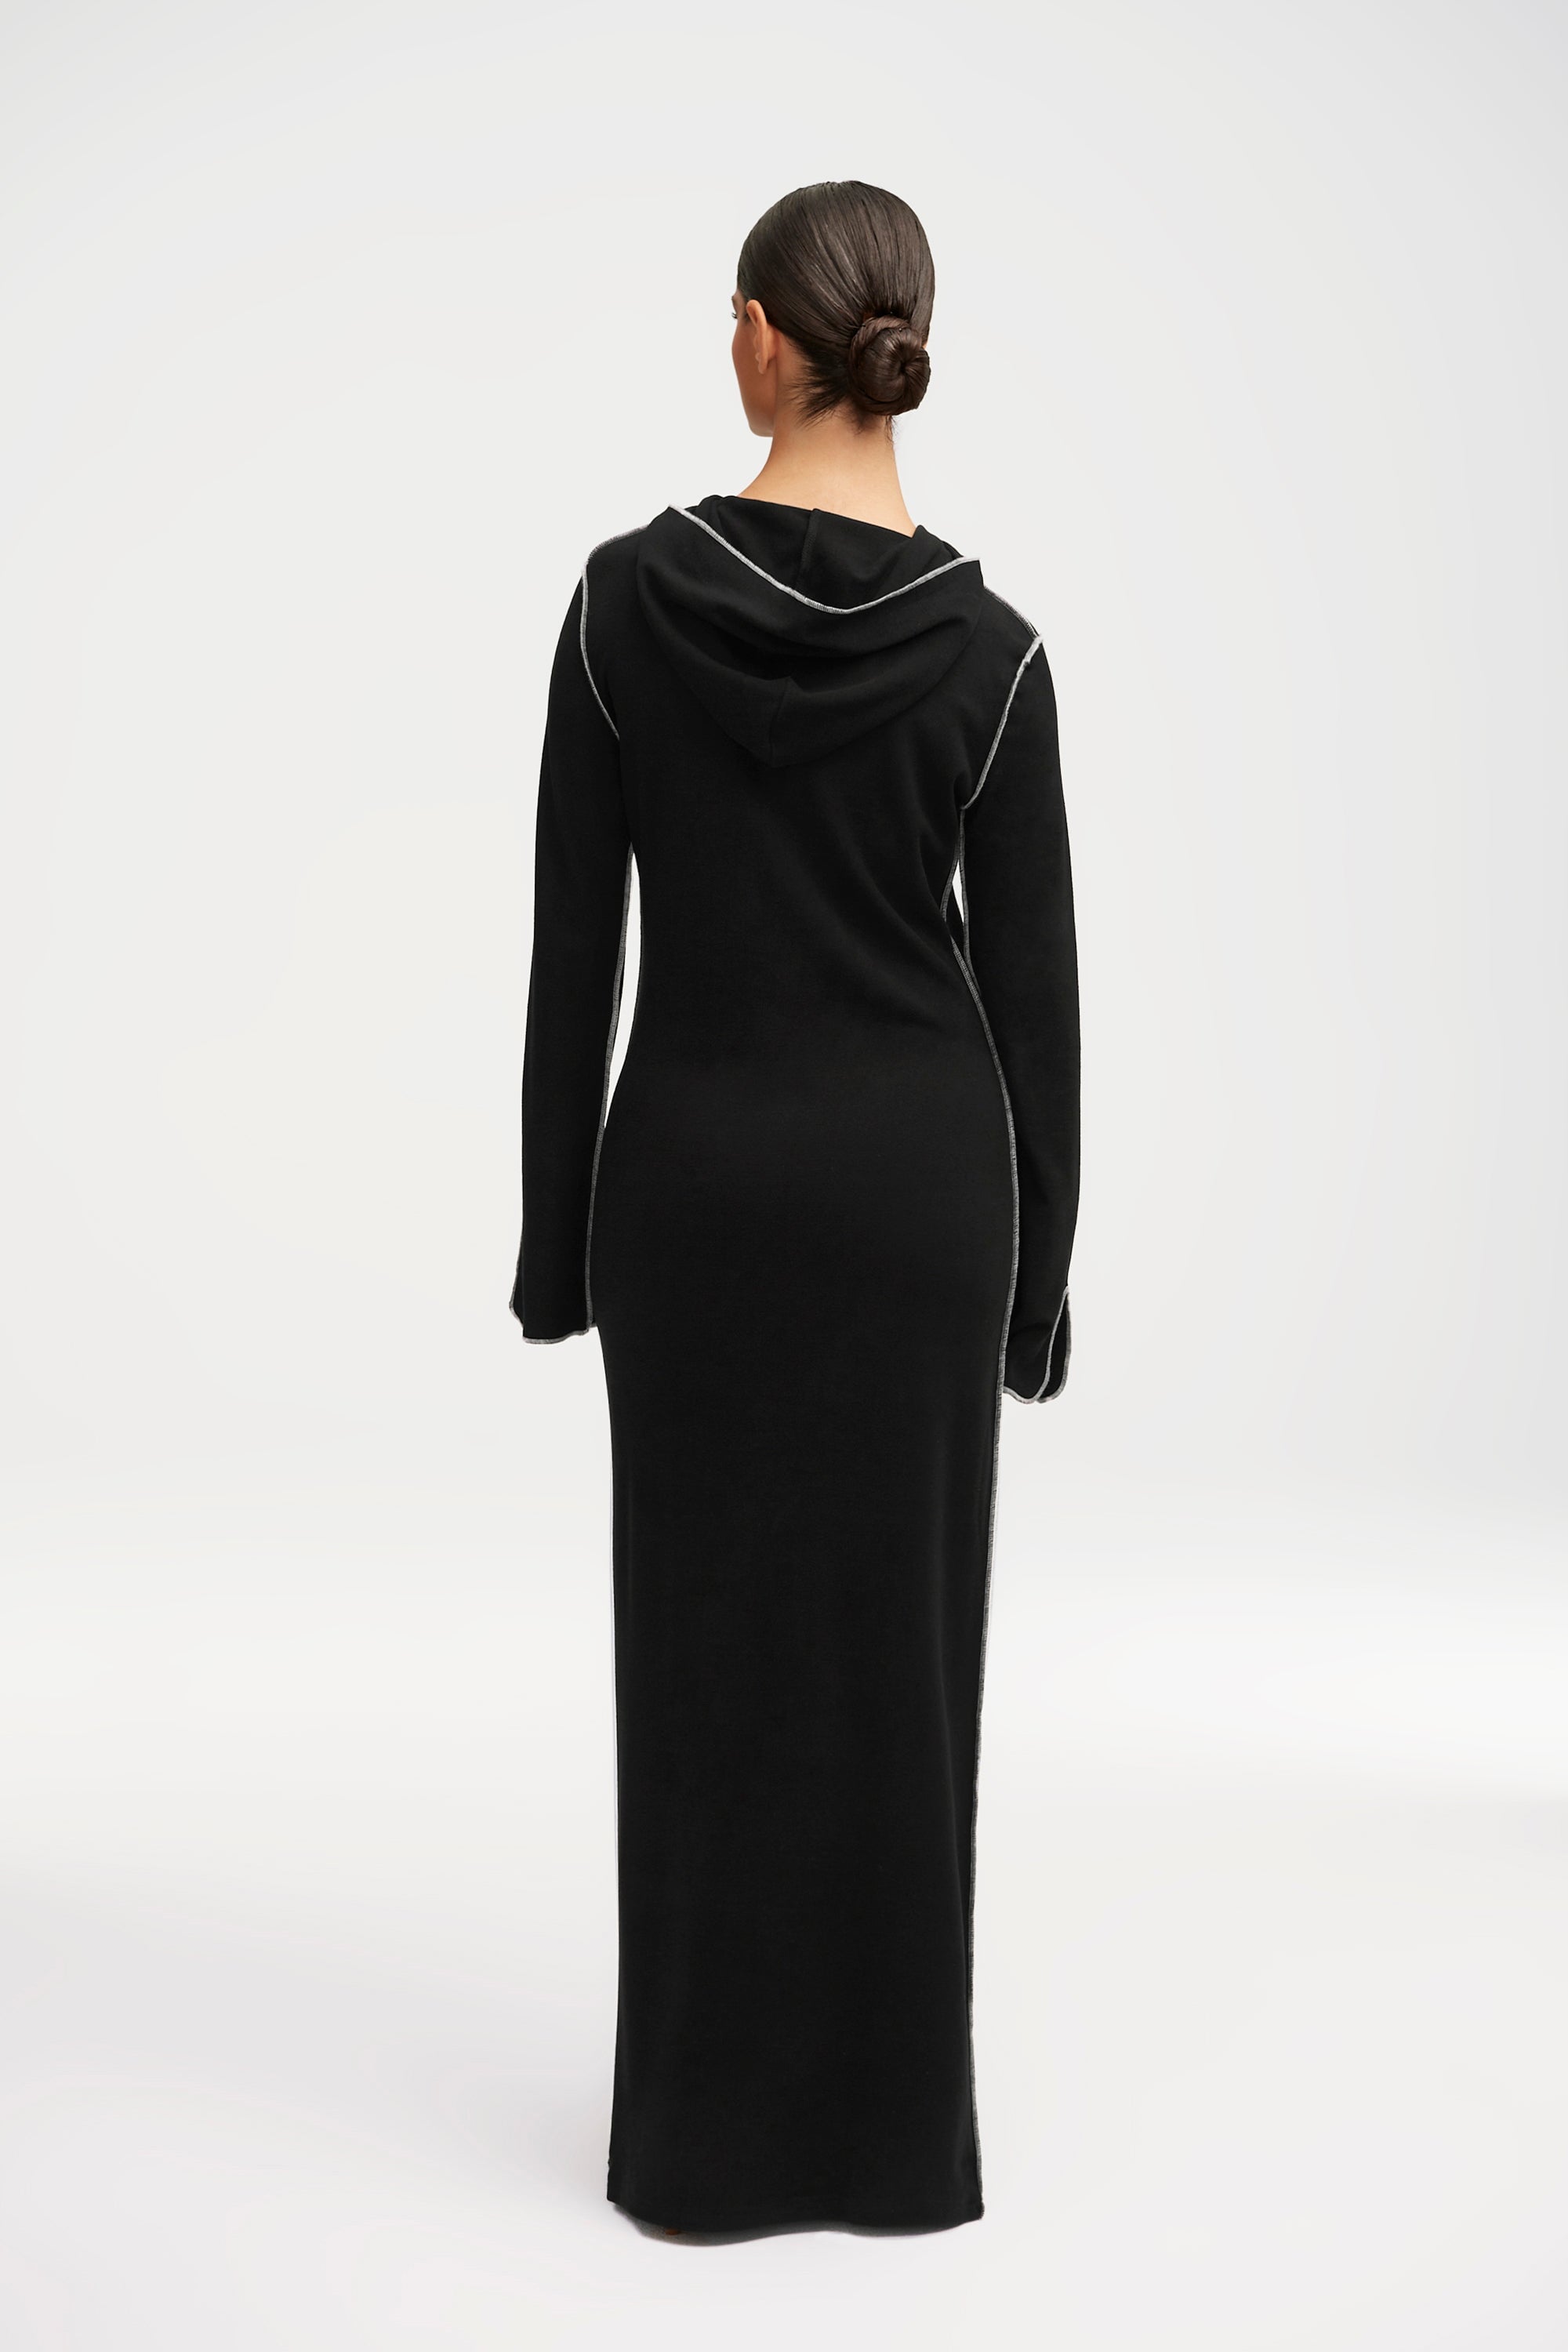 Ava Sweater Hoodie Maxi Dress - Black Clothing Veiled 